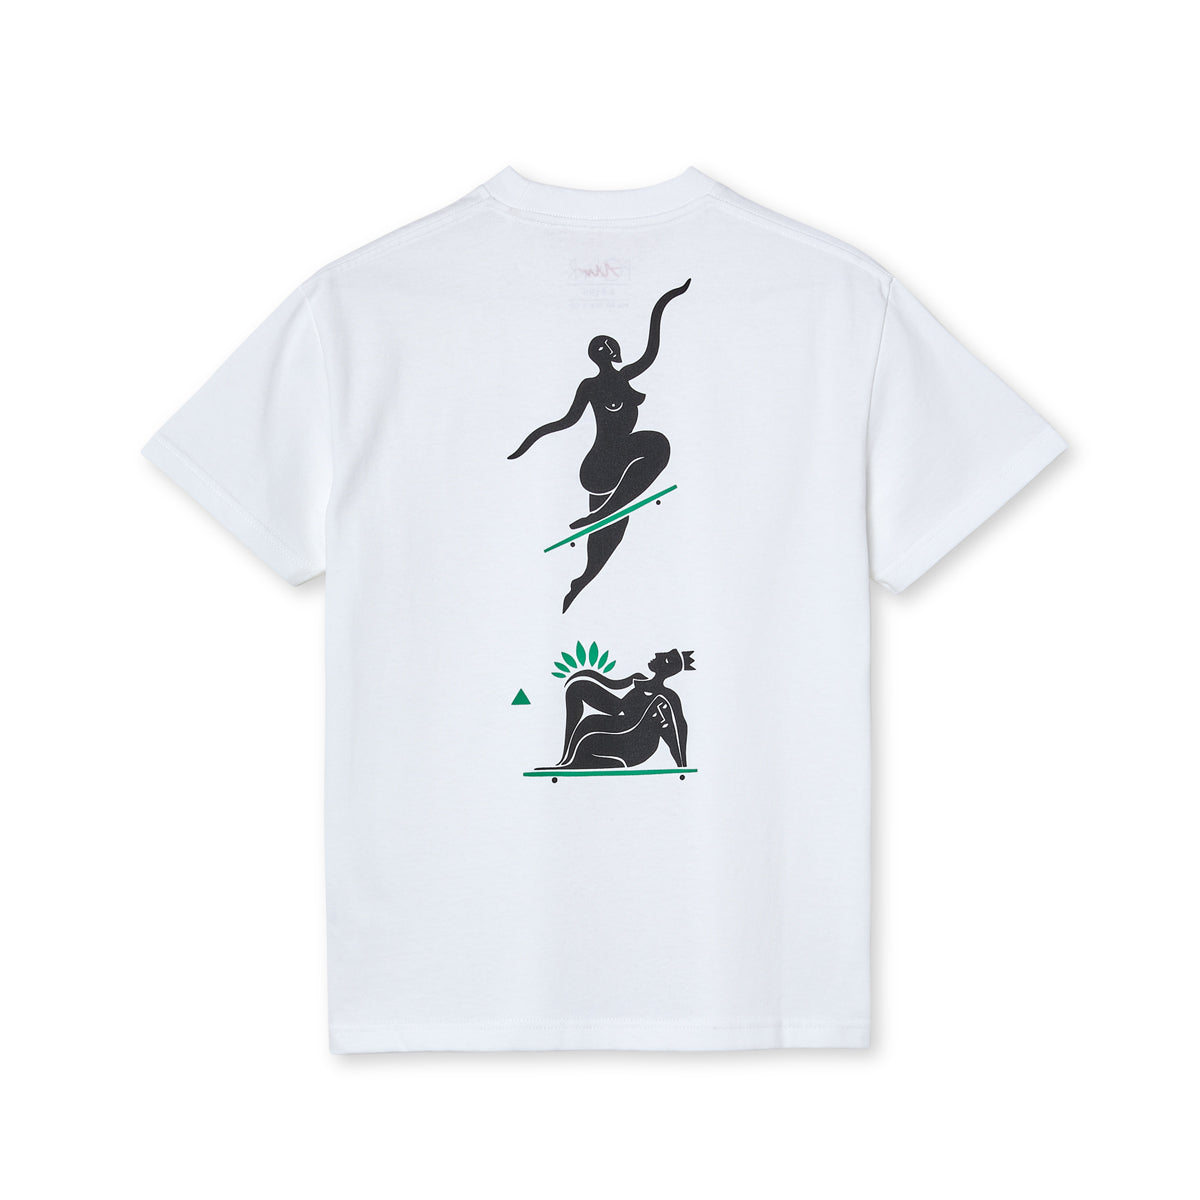 Polar Skate Co. No Complies Forever YOUTH T-Shirt (White) - Apple Valley Emporium